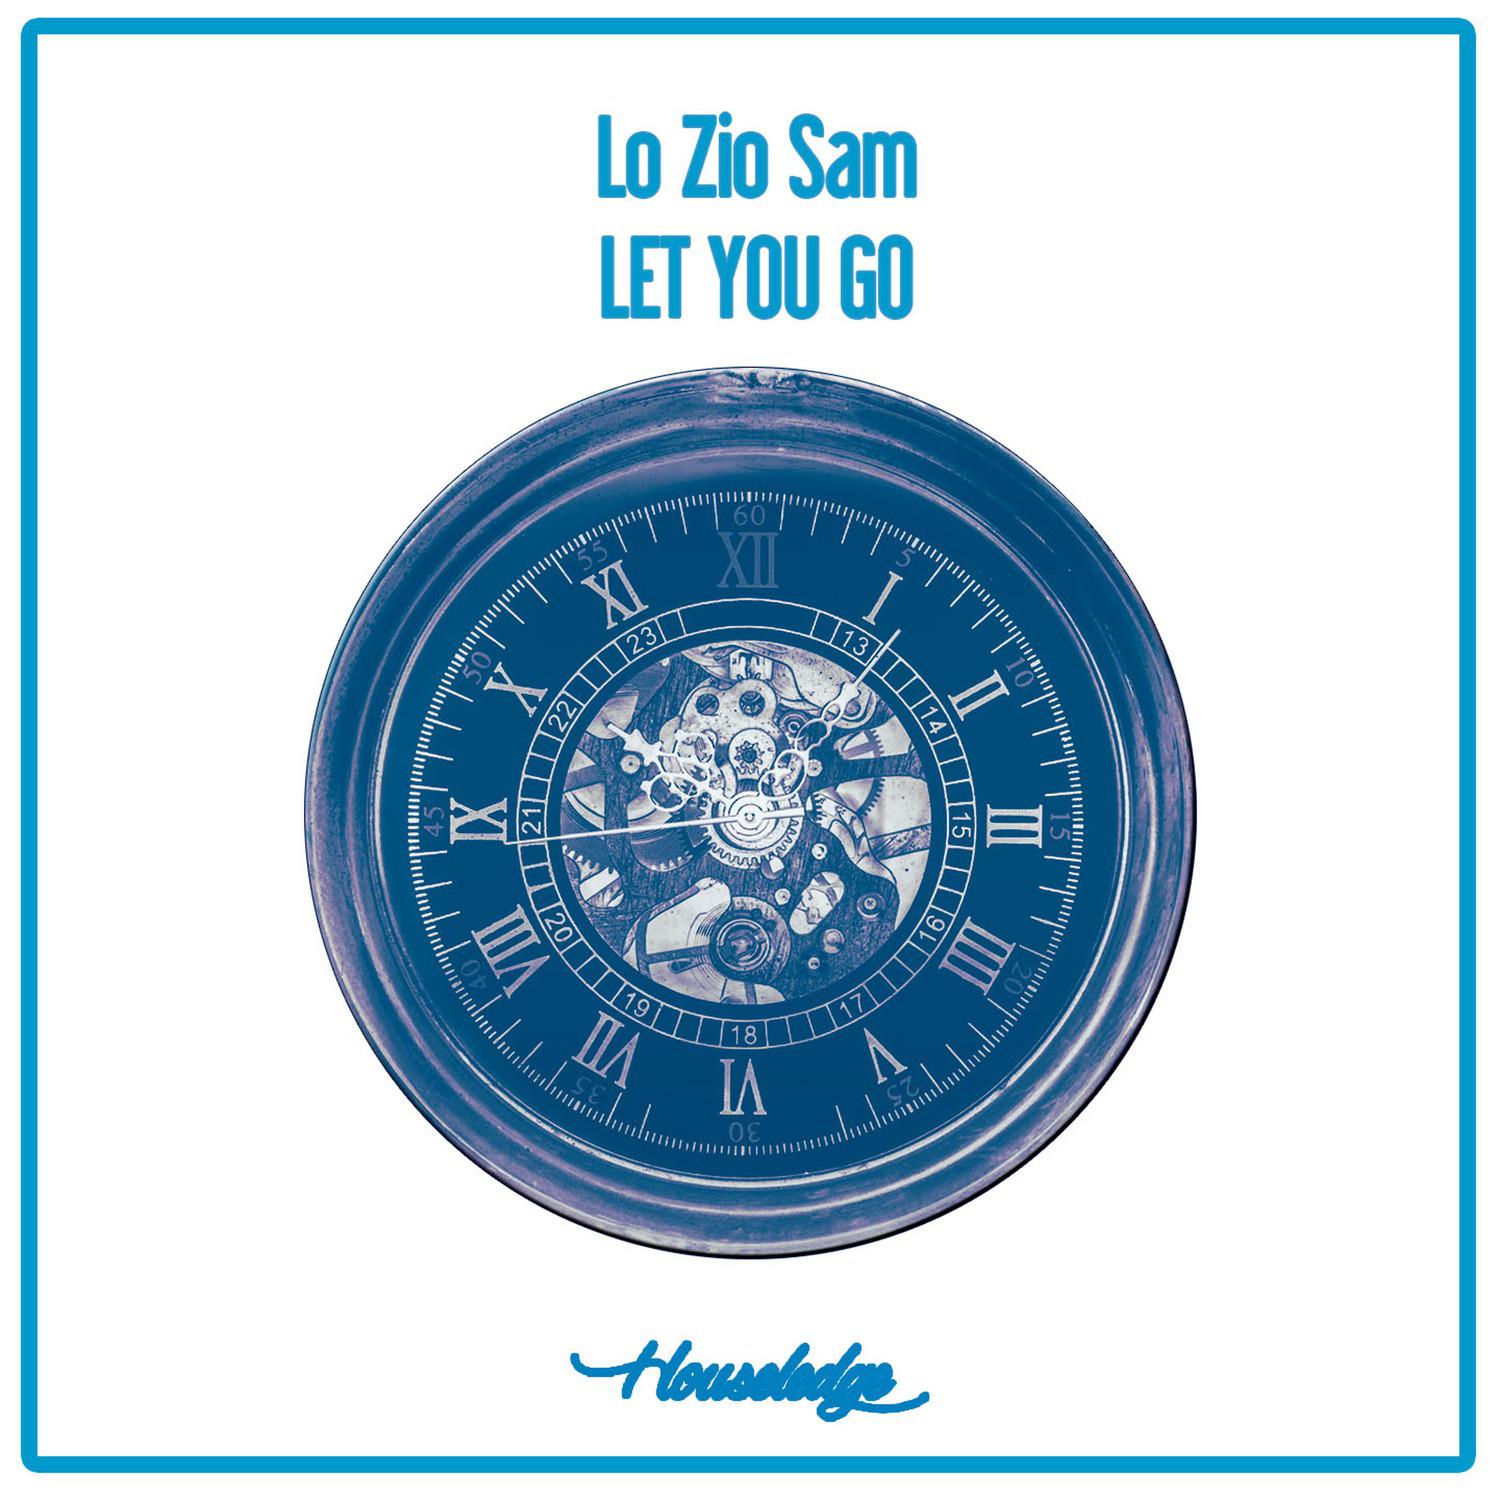 Lo Zio Sam - Let You Go (Nu Ground Foundation Instrumental)